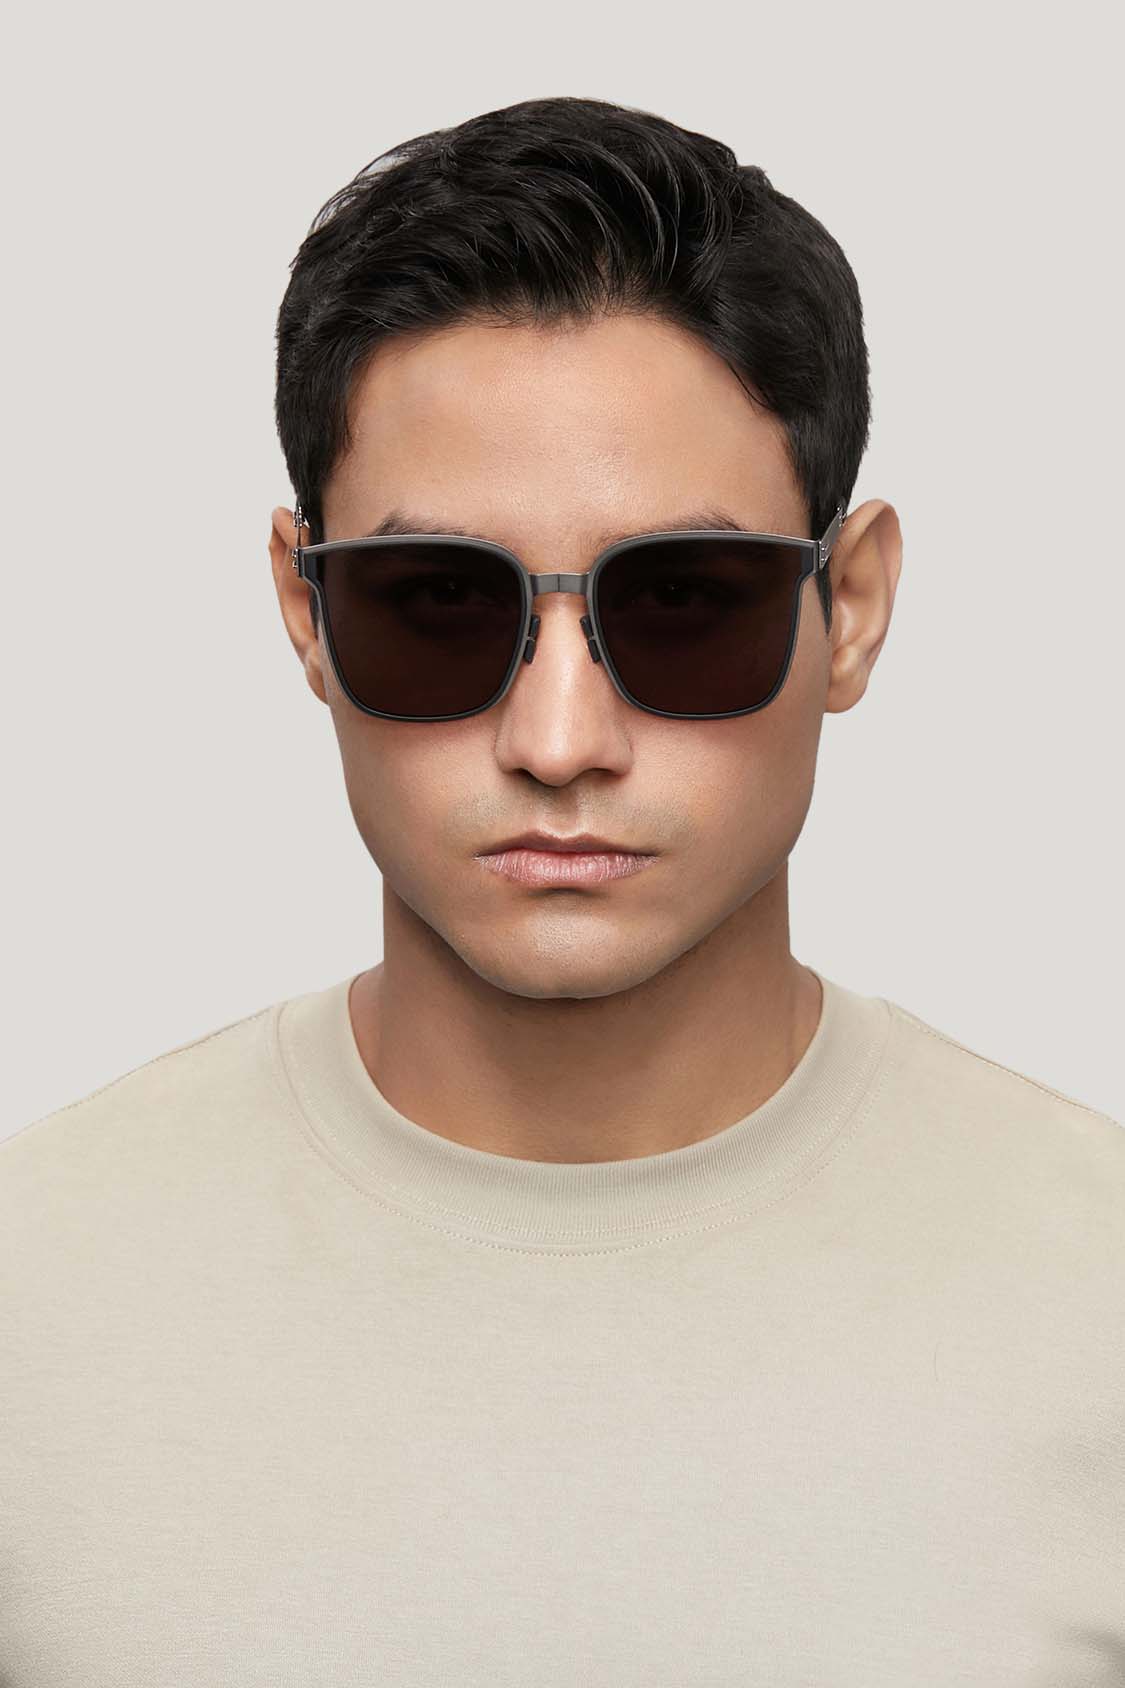 BENEUNDER Sunglasses, Polarized Lenses, 100% UV Algeria